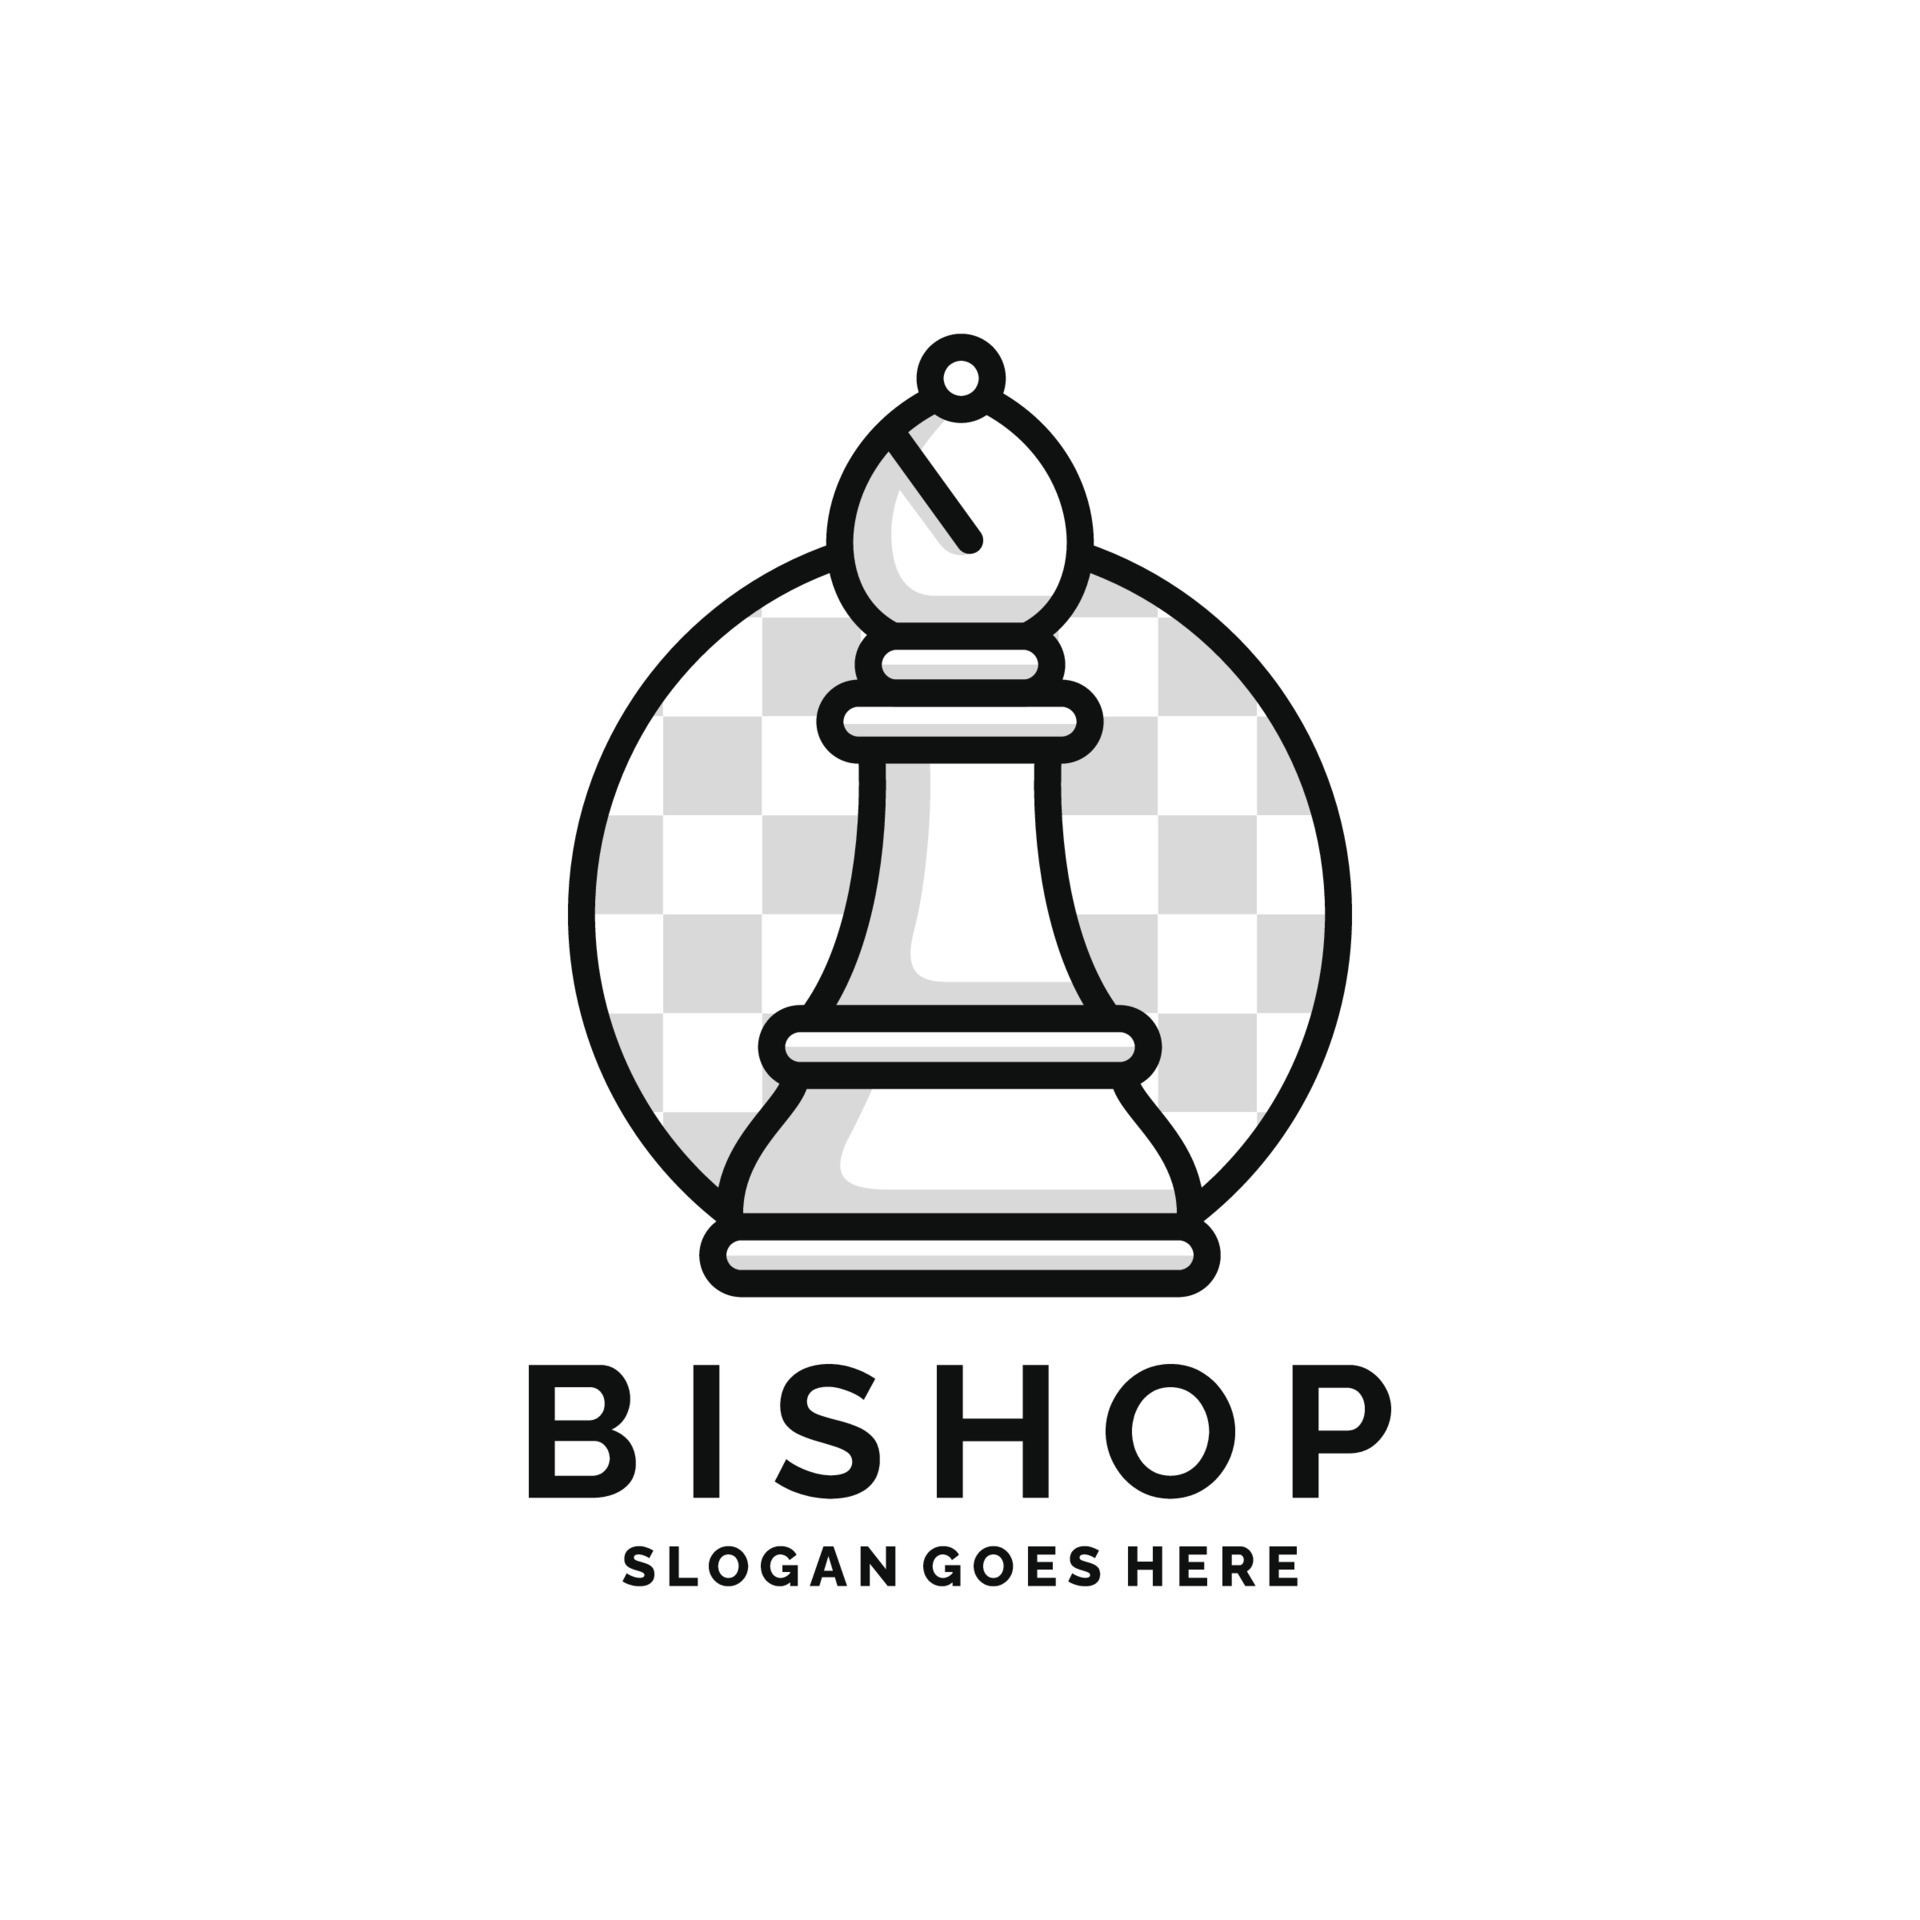 bispo xadrez logotipo Projeto vetor ilustração 23959766 Vetor no Vecteezy